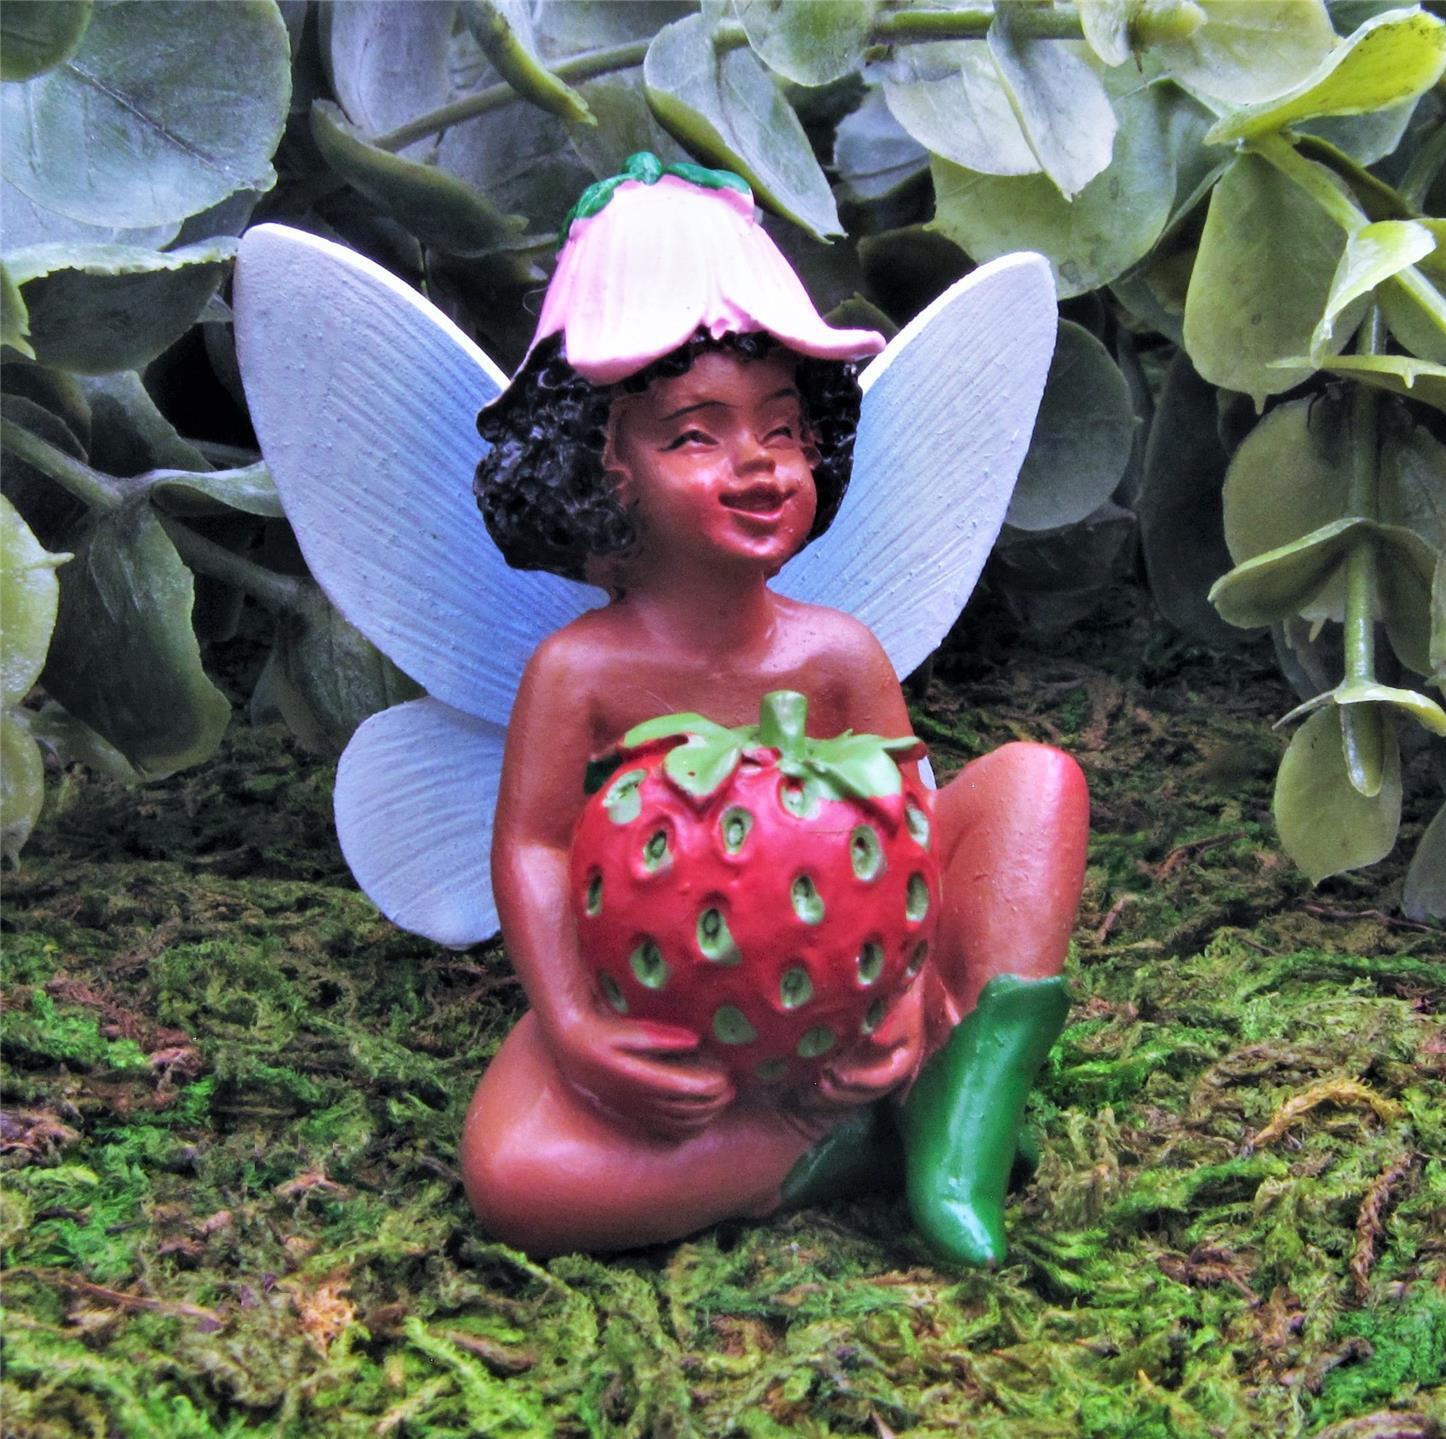 Miniature Fairy Garden Sitting Black Fairy Holding Strawberry - Buy 3 Save $5